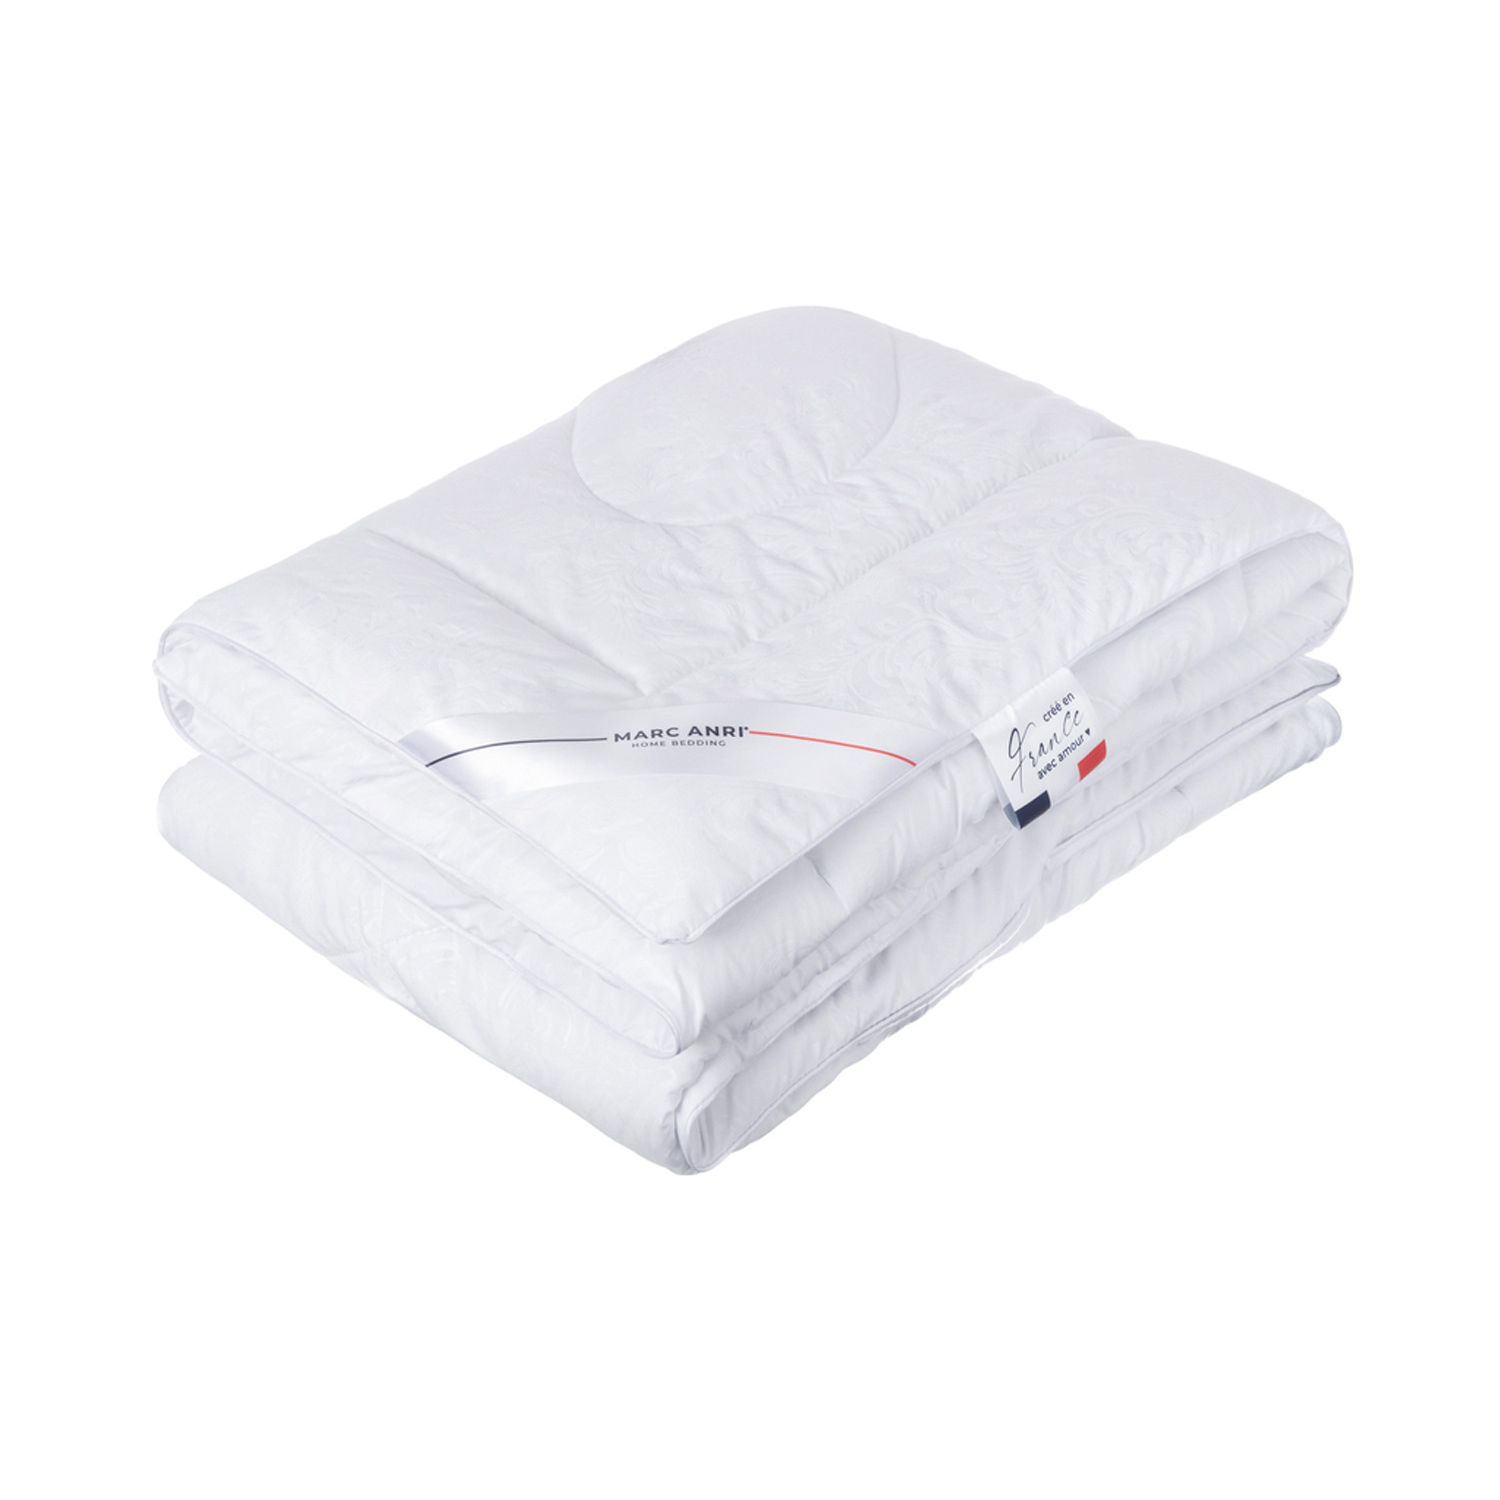 Одеяло Marc Anri Chinon белое 175х200 см (MA-MF) одеяло marc anri rouffach белое 140х200 см ma ec